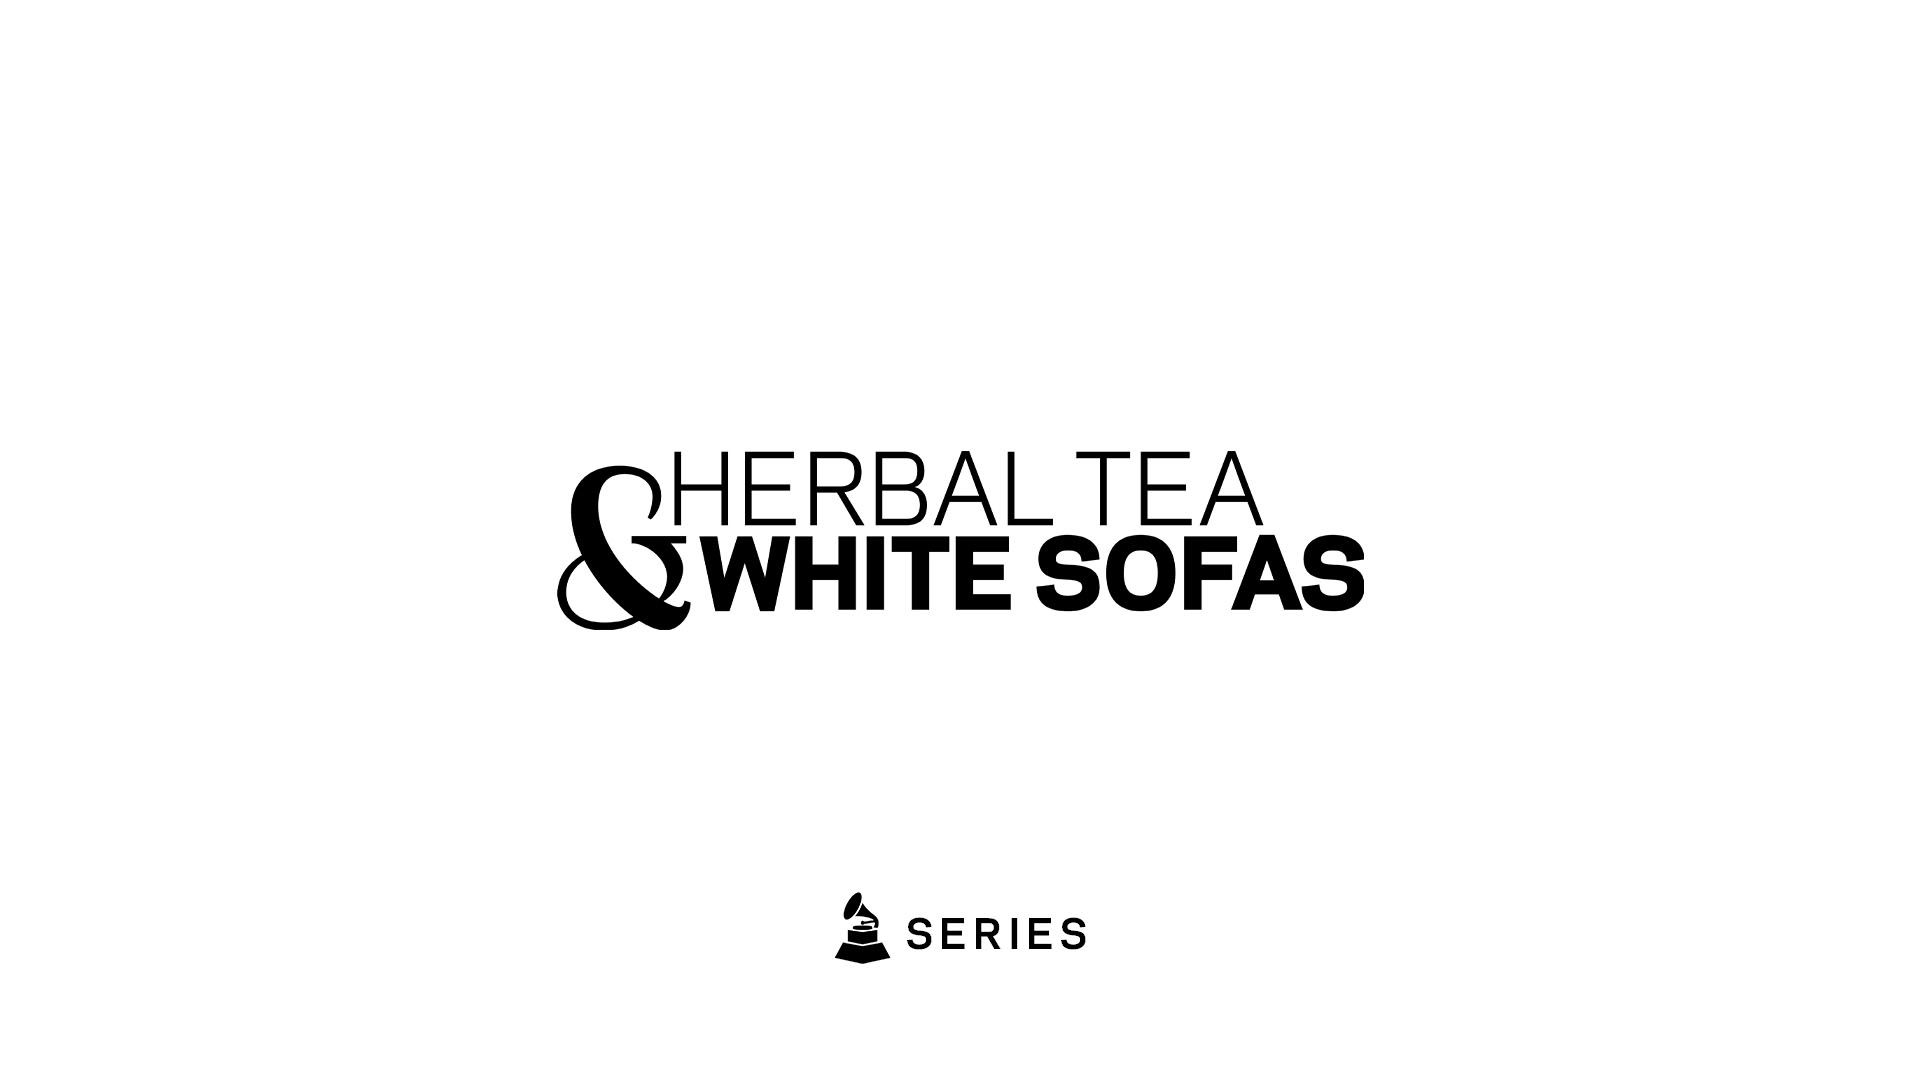 Nicki Nicole Details Her Tour Essentials, Including One Polarizing Snack | Herbal Tea & White Sofas